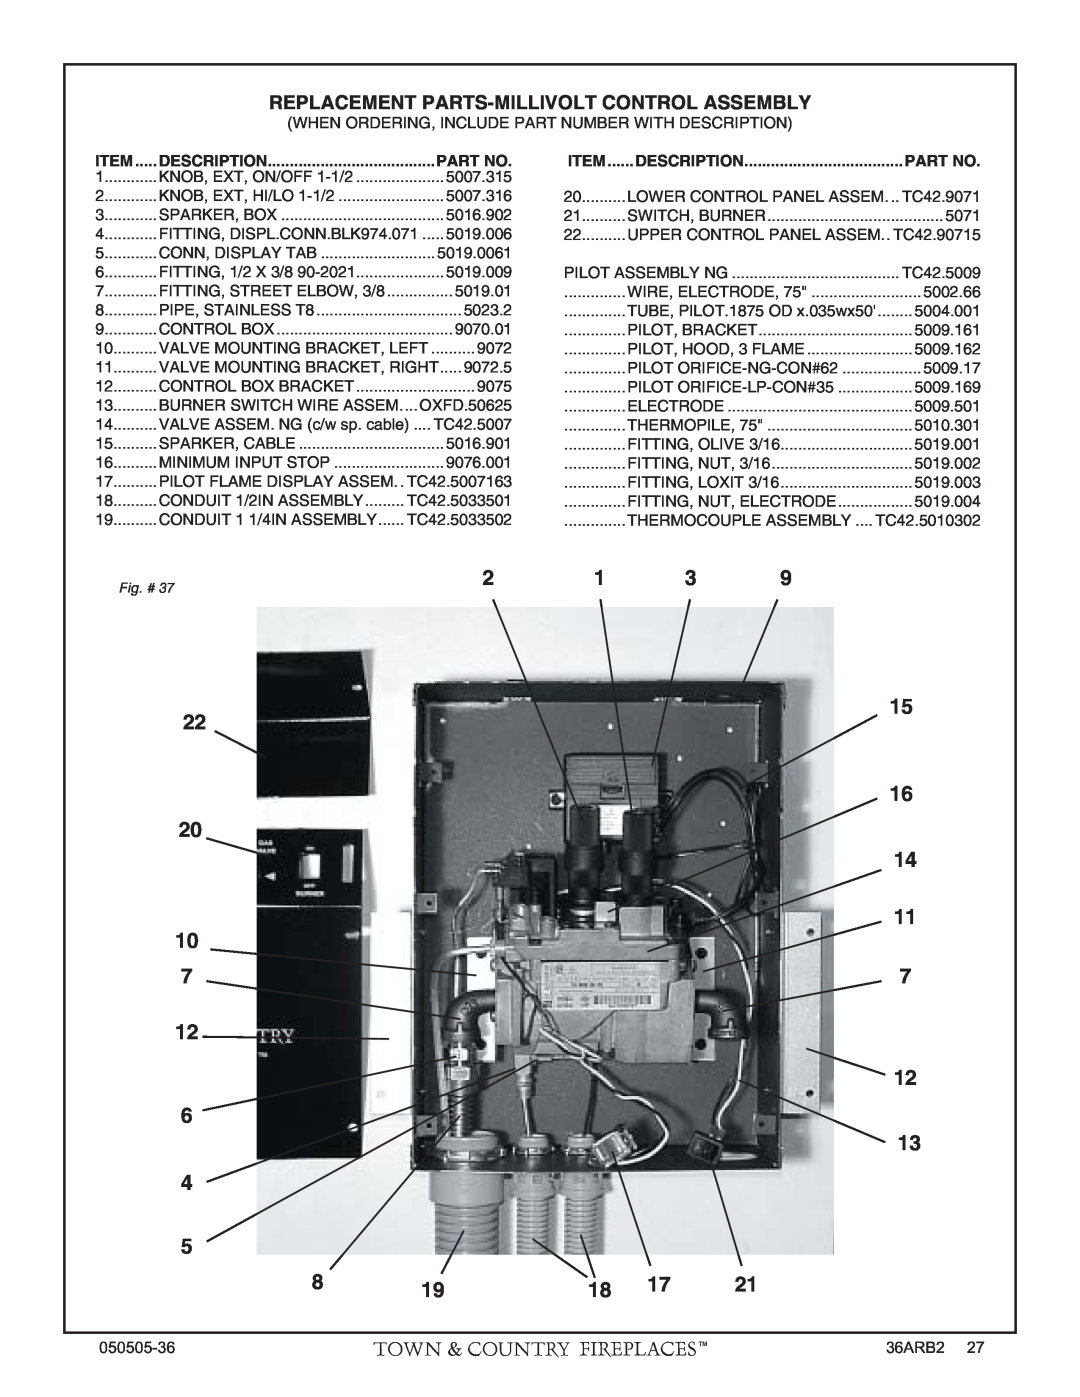 PGS TC36 AR manual Replacement Parts-Millivoltcontrol Assembly 